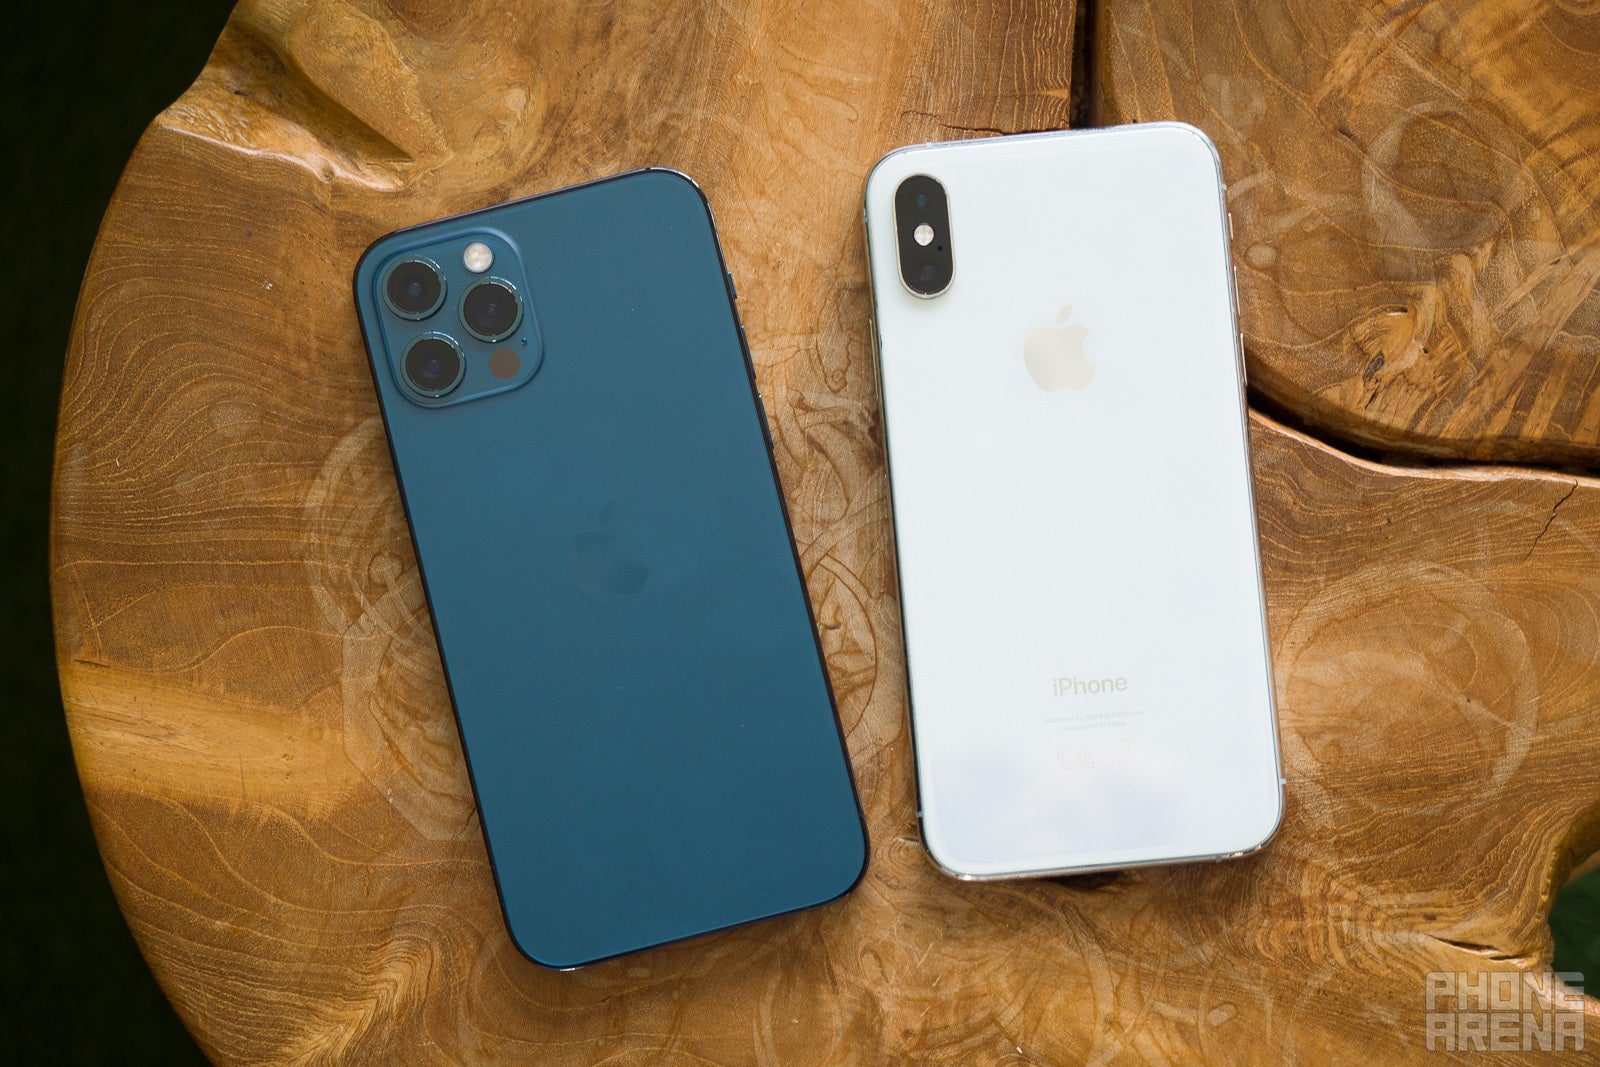 Apple iPhone 12 Pro/Max vs iPhone XS/Max